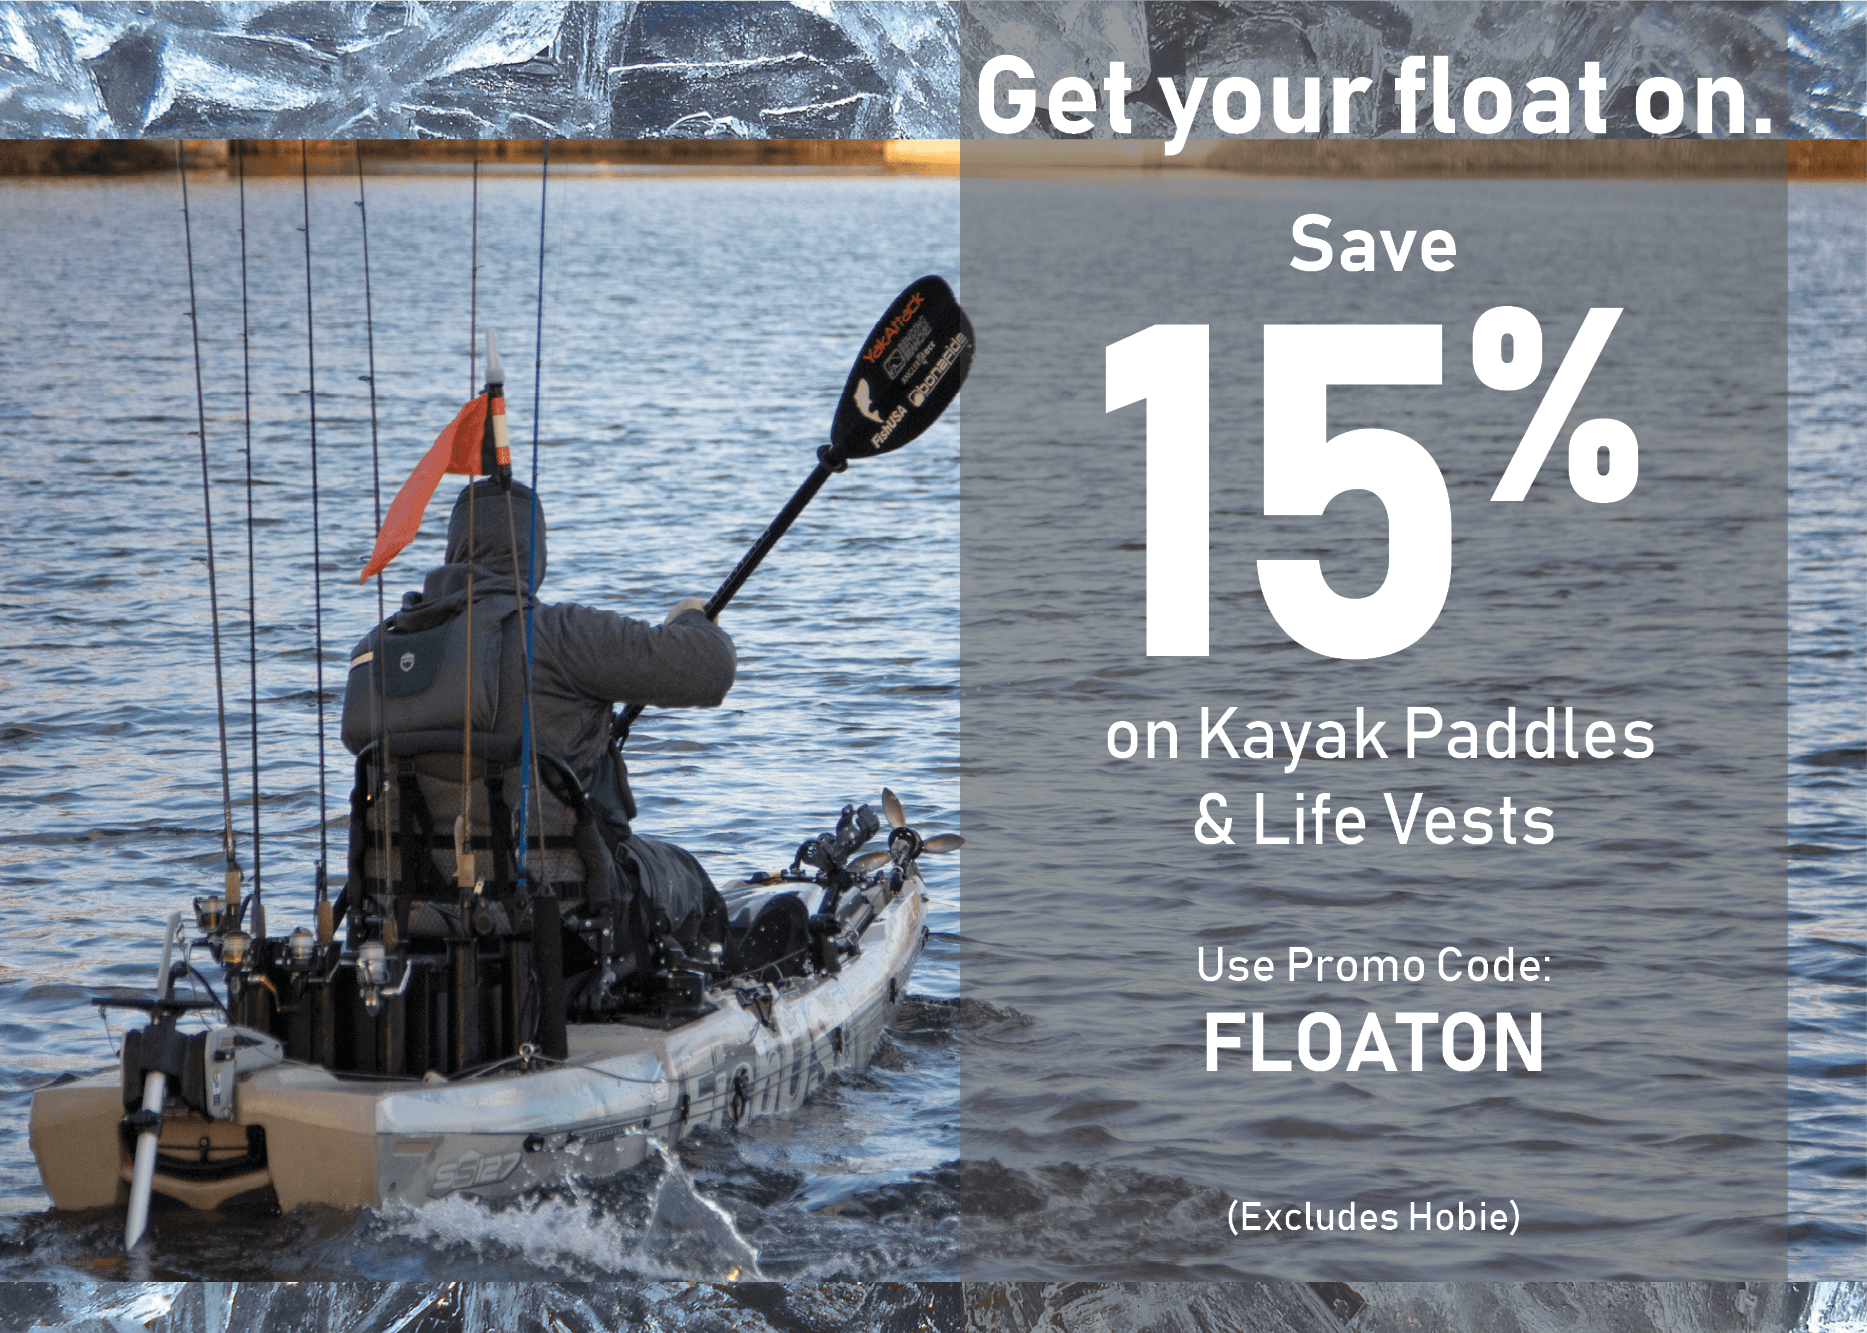 Save 15% on Kayak Paddles & Life Vests